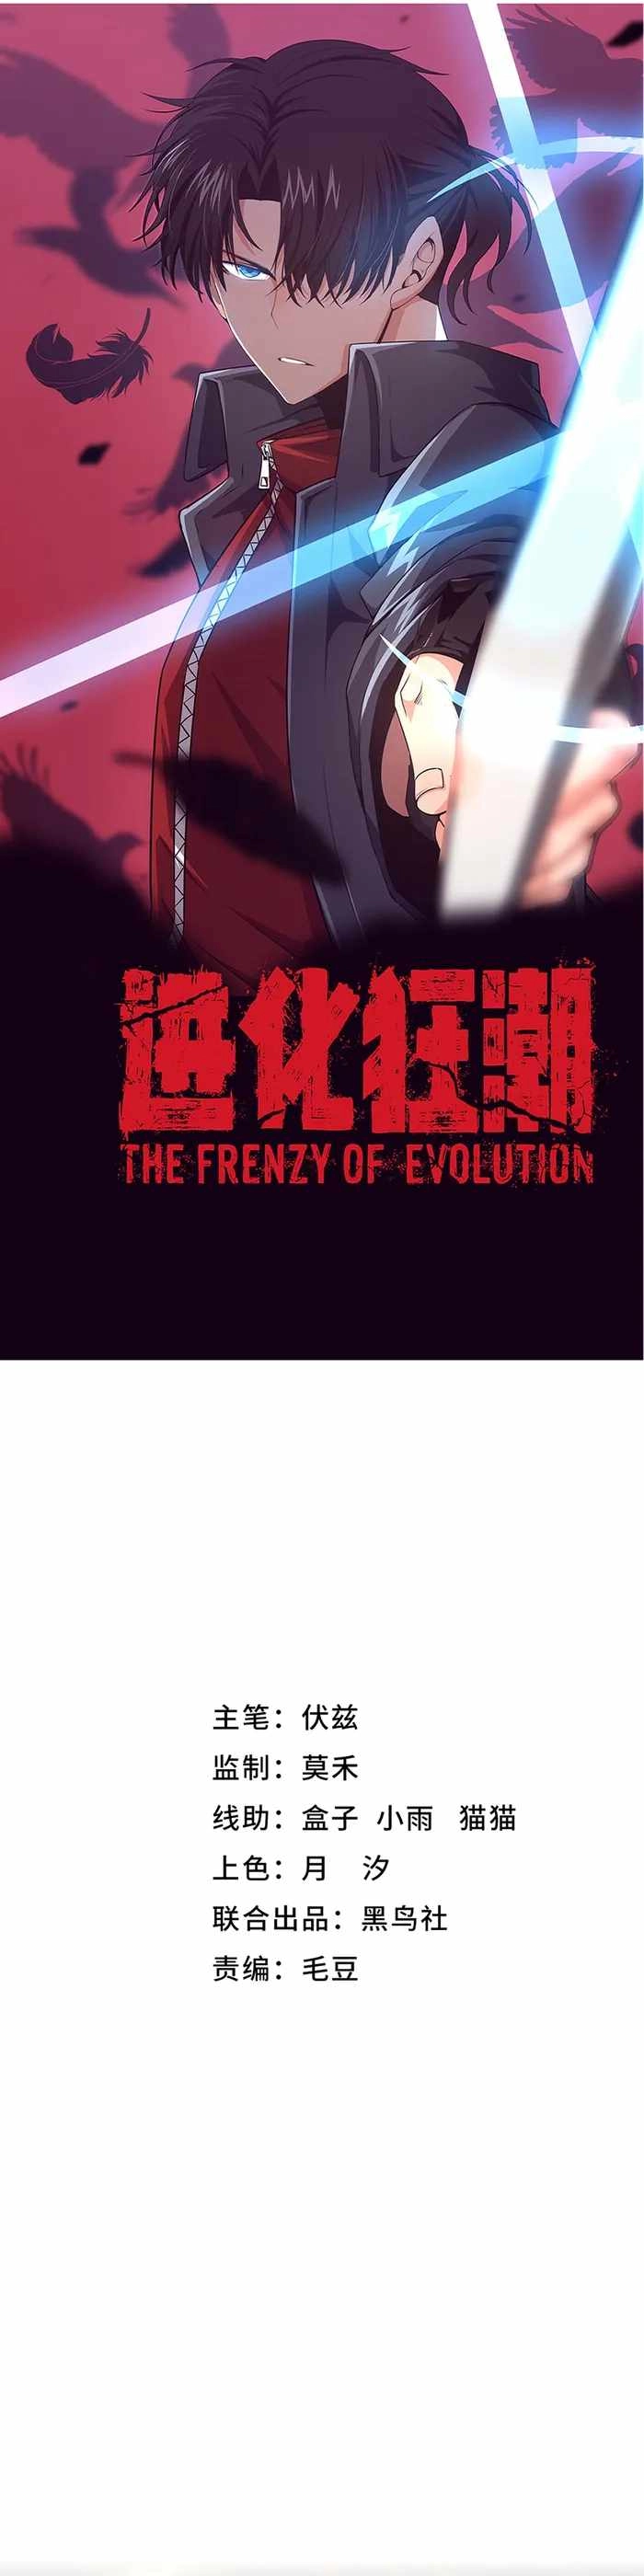 Evolution frenzy Chapter 138